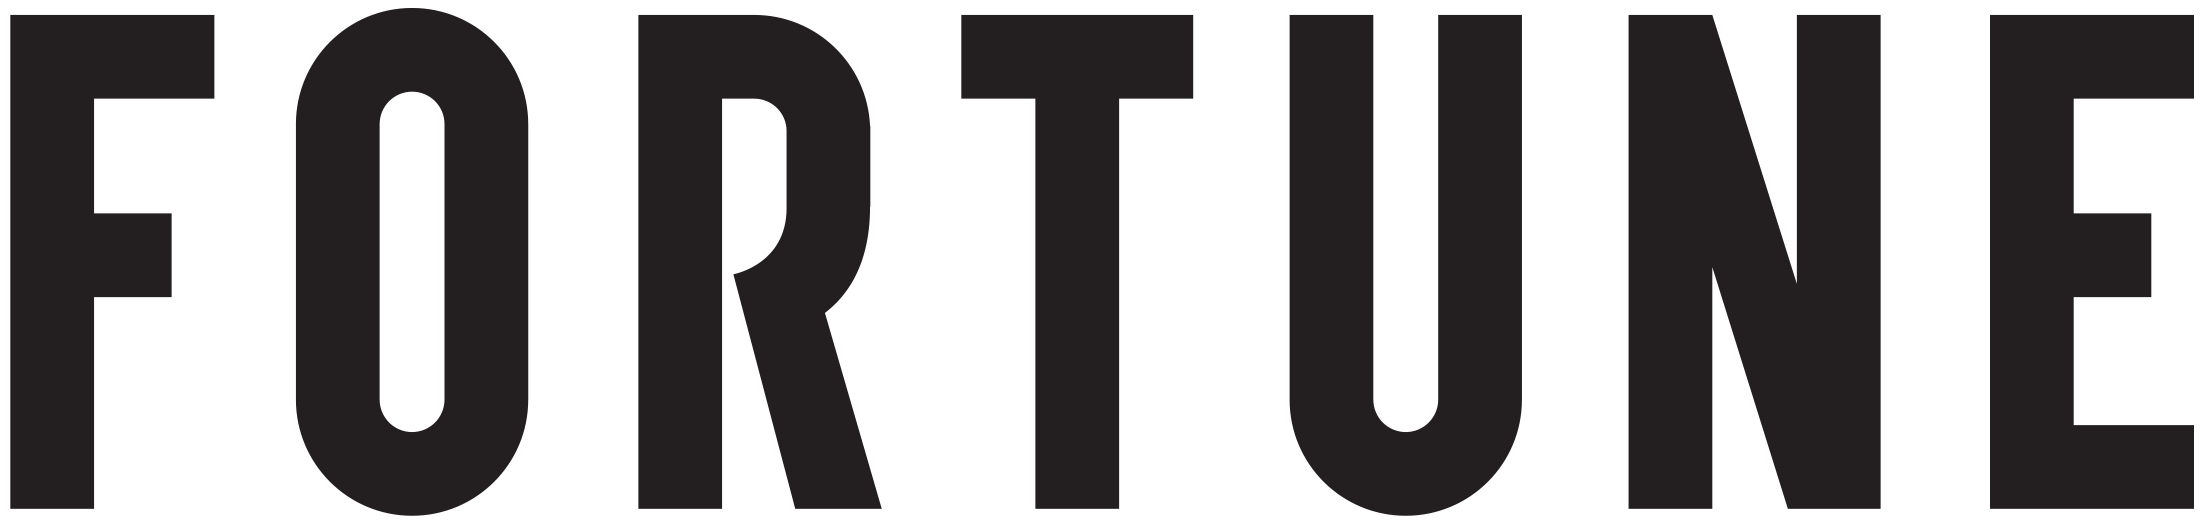 Fortune magazine logo